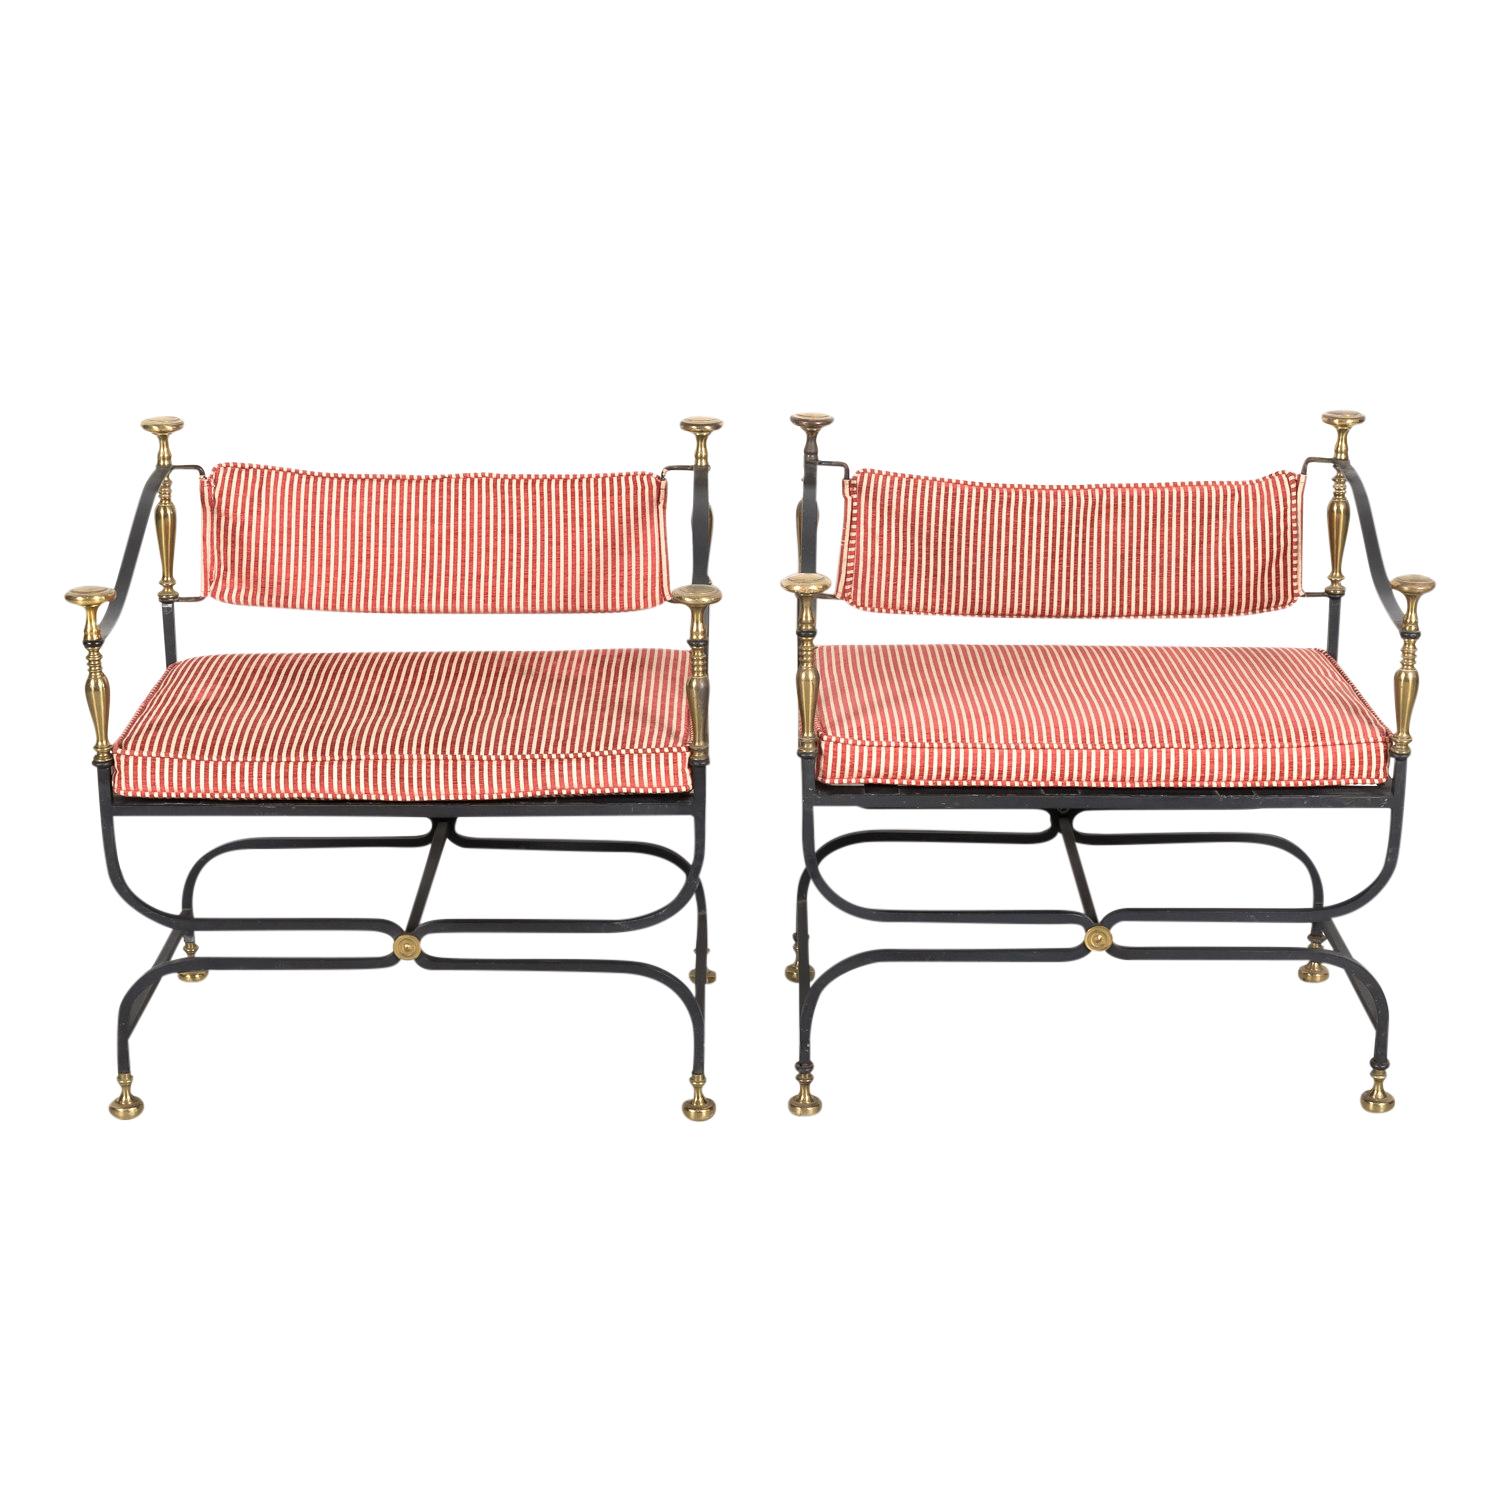 Pair of Italian Iron and Brass Savonarola Chairs with Loose Cushions